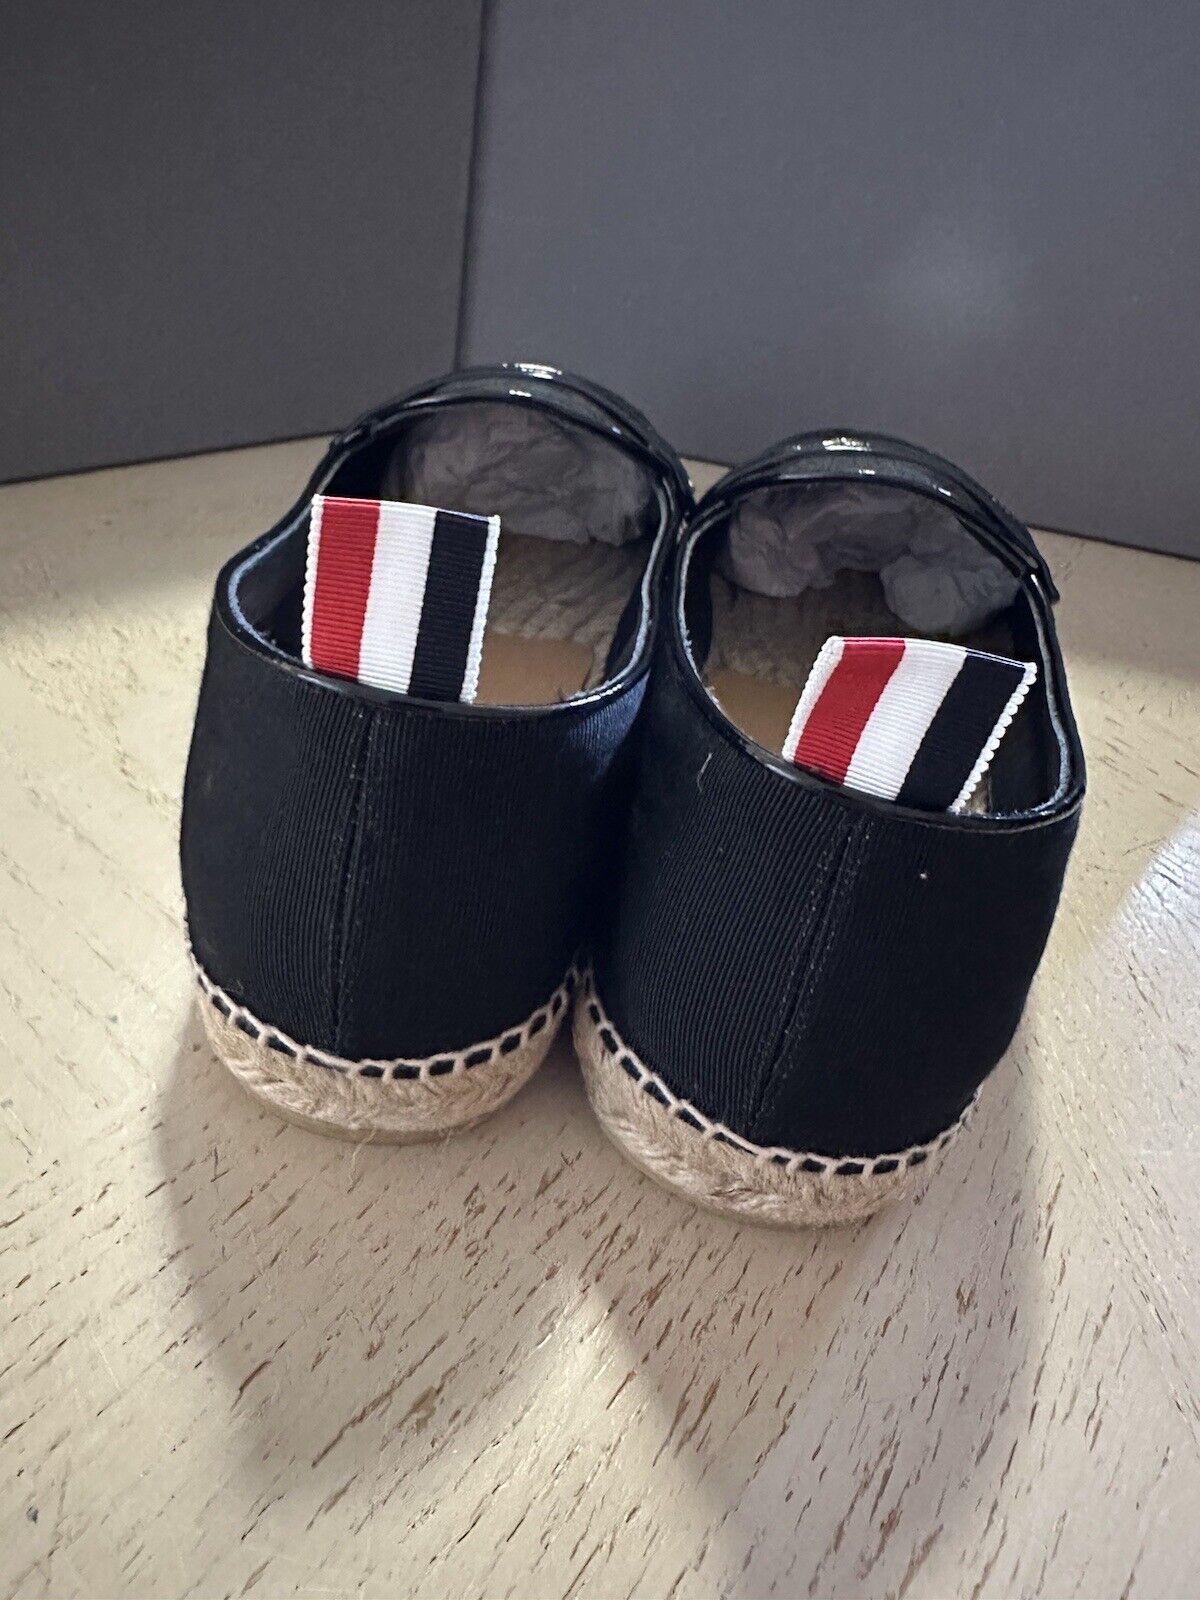 NIB $730 Thom Browne Men Penny Espadrille Loafers Shoes Black 8 US/41 EU Spain